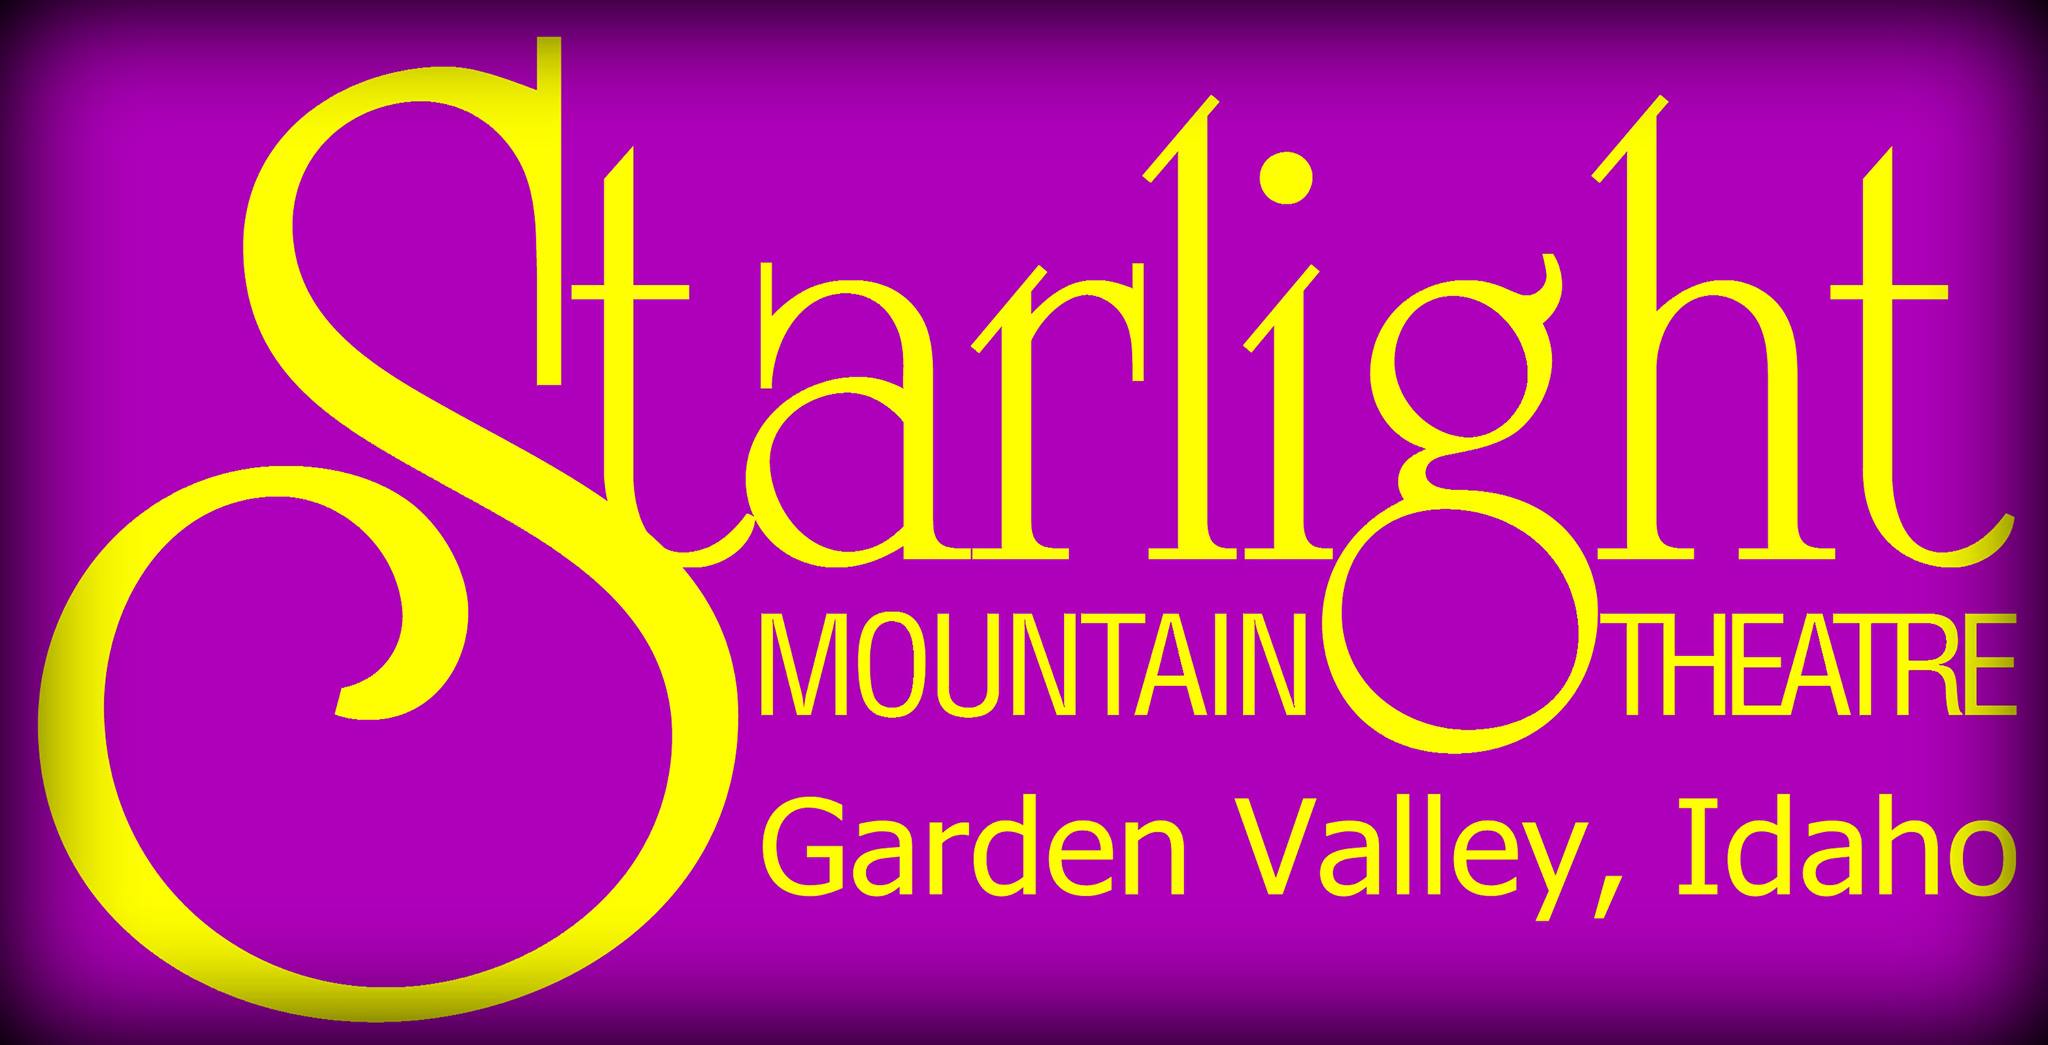 Starlight Mountain Theatre logo